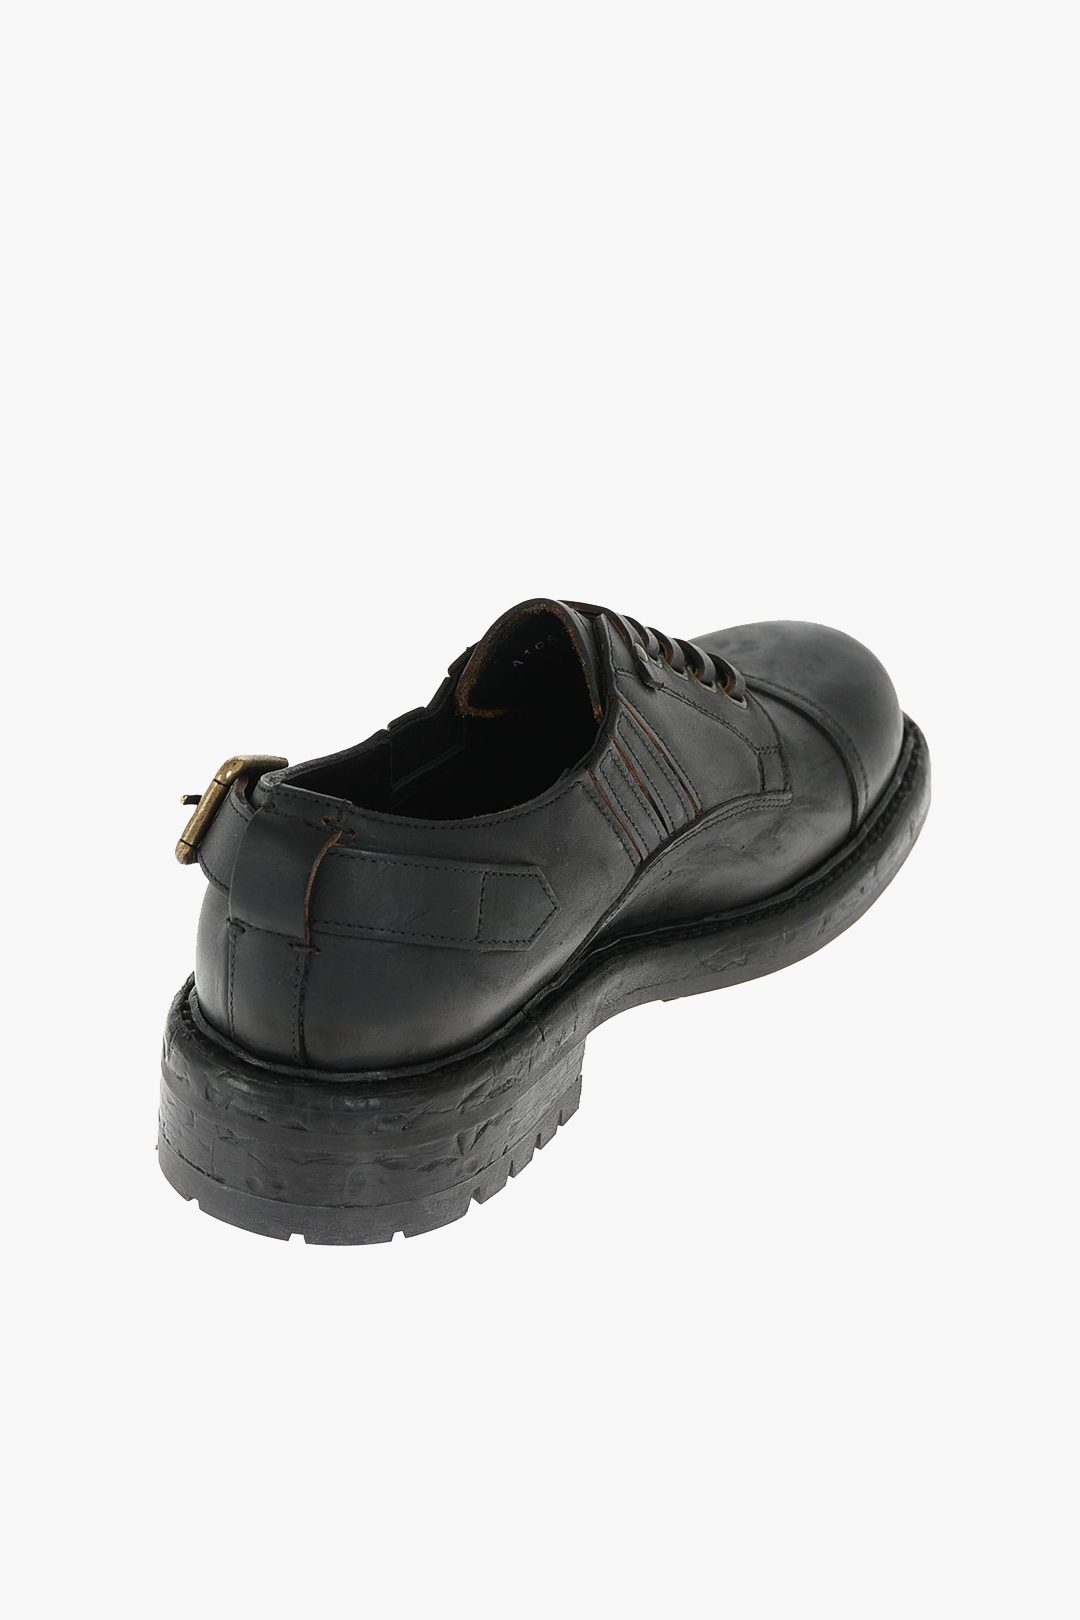 Italian Bernini Shoe in Lagos Island (Eko) - Shoes, Munash Wears